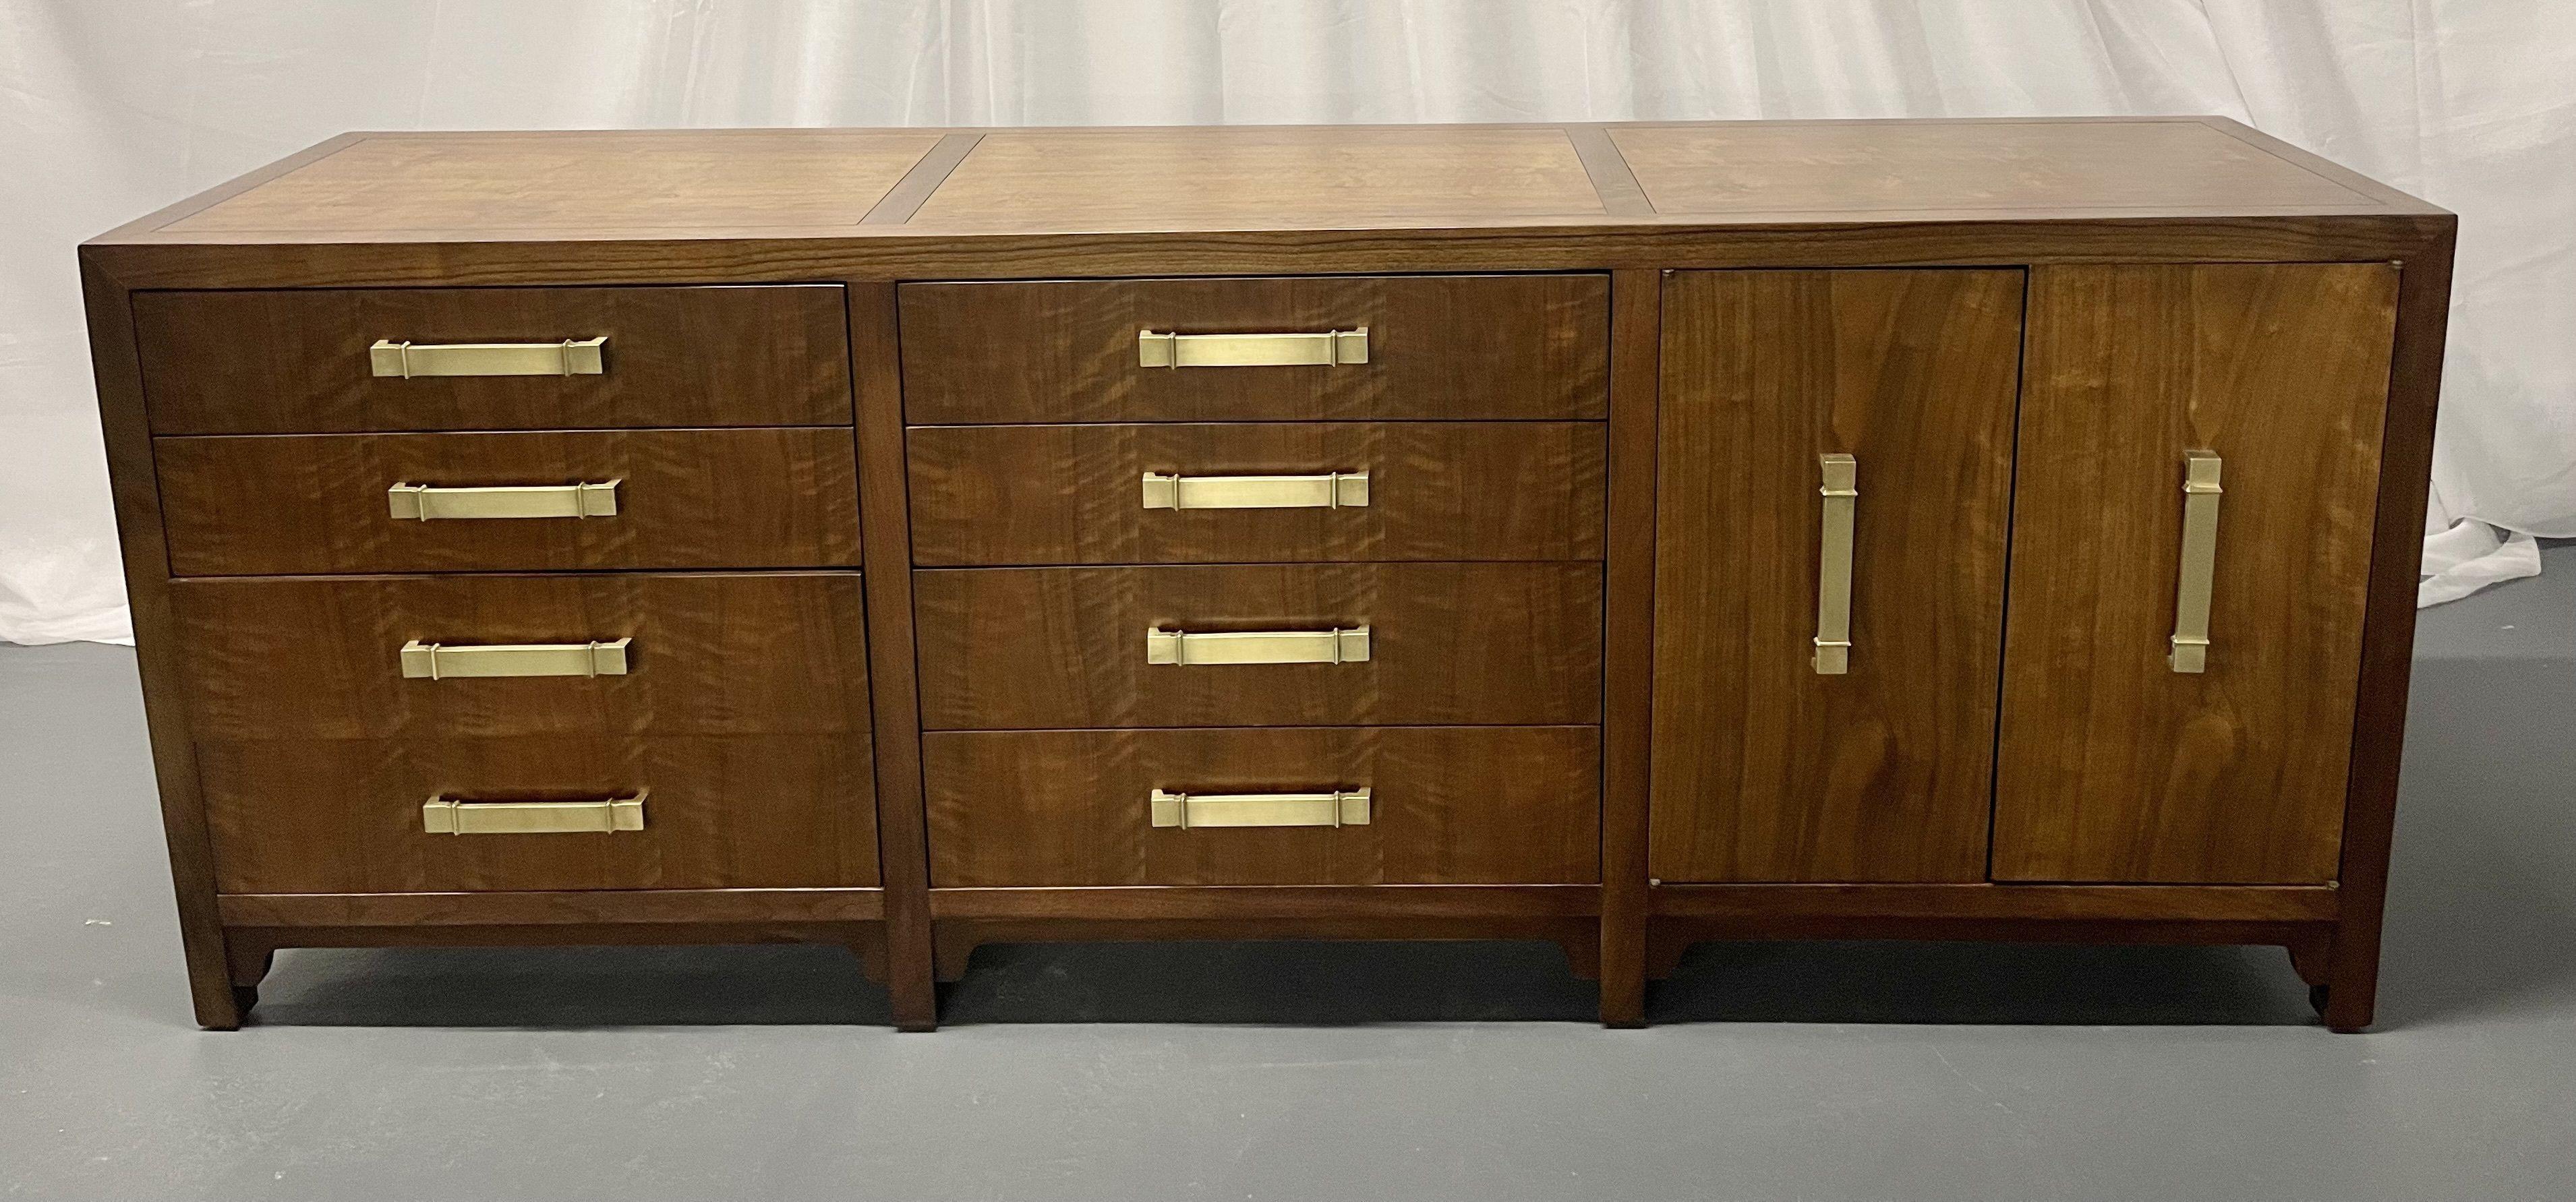 Mid-Century Modern Dresser/Sideboard/Cabinet, American, Walnut, Brass Accents 1